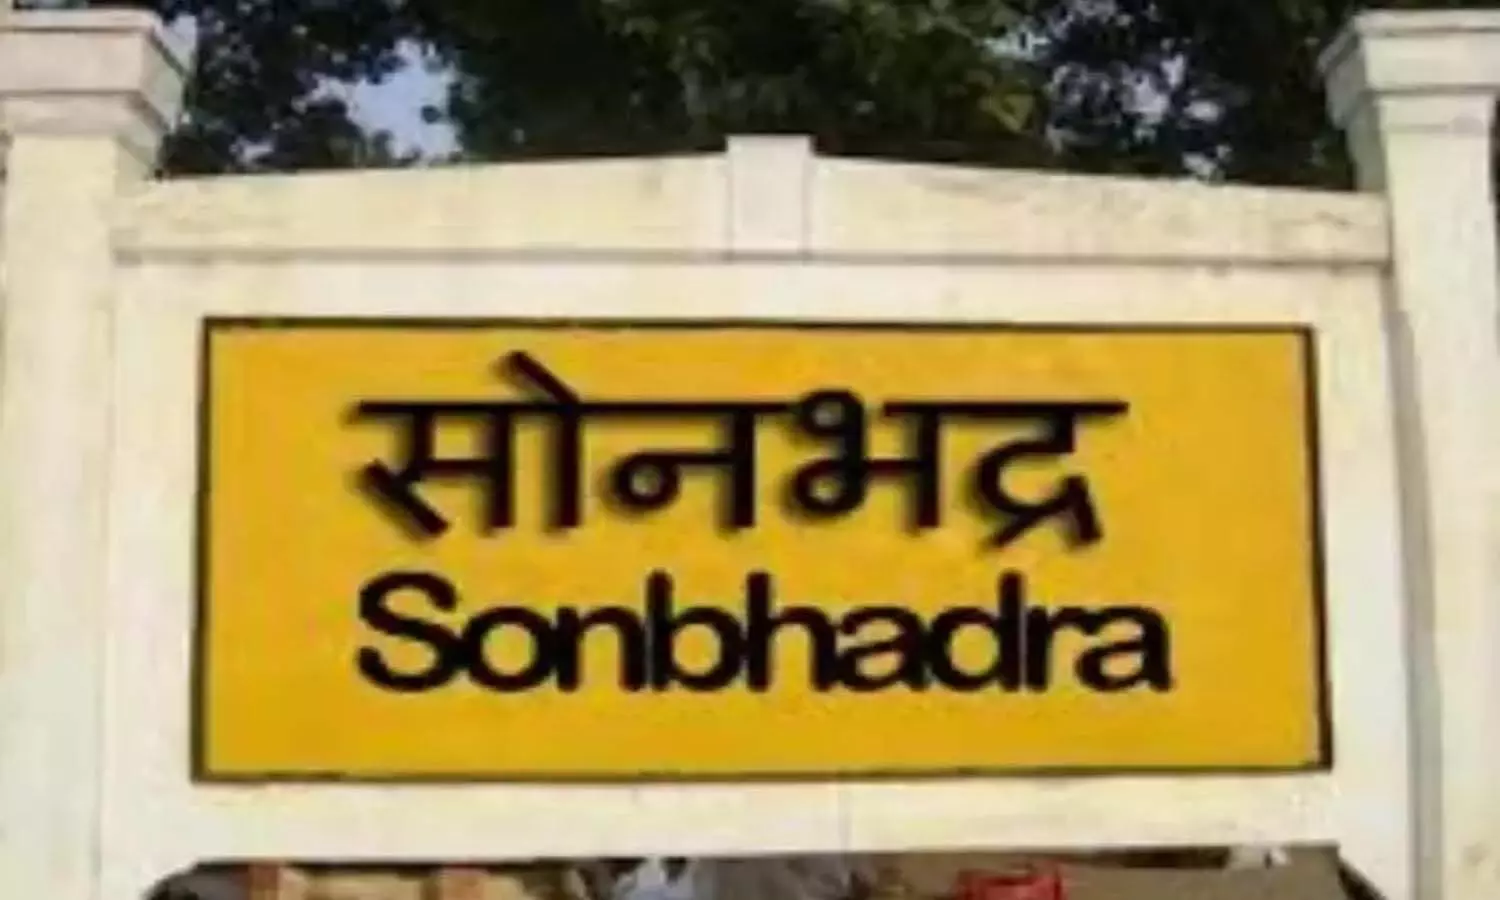 Sonbhadra news in hindi